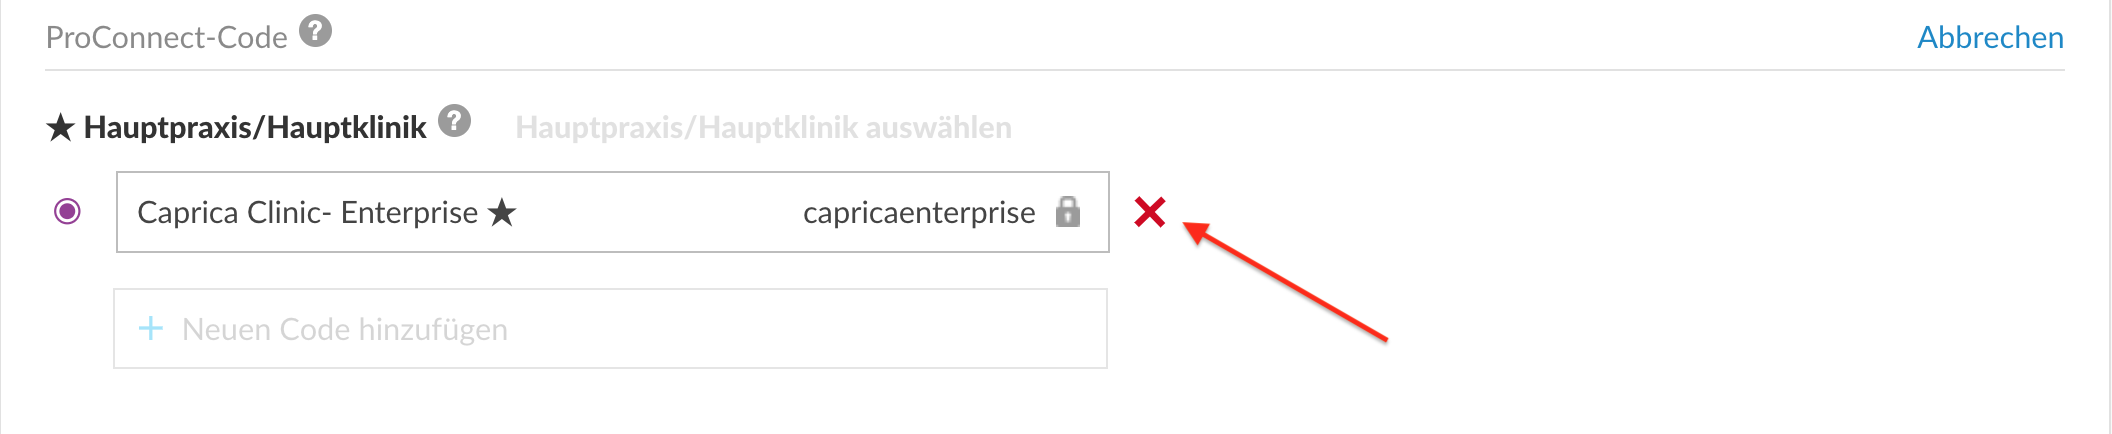 german-web-deleteproconnect.png